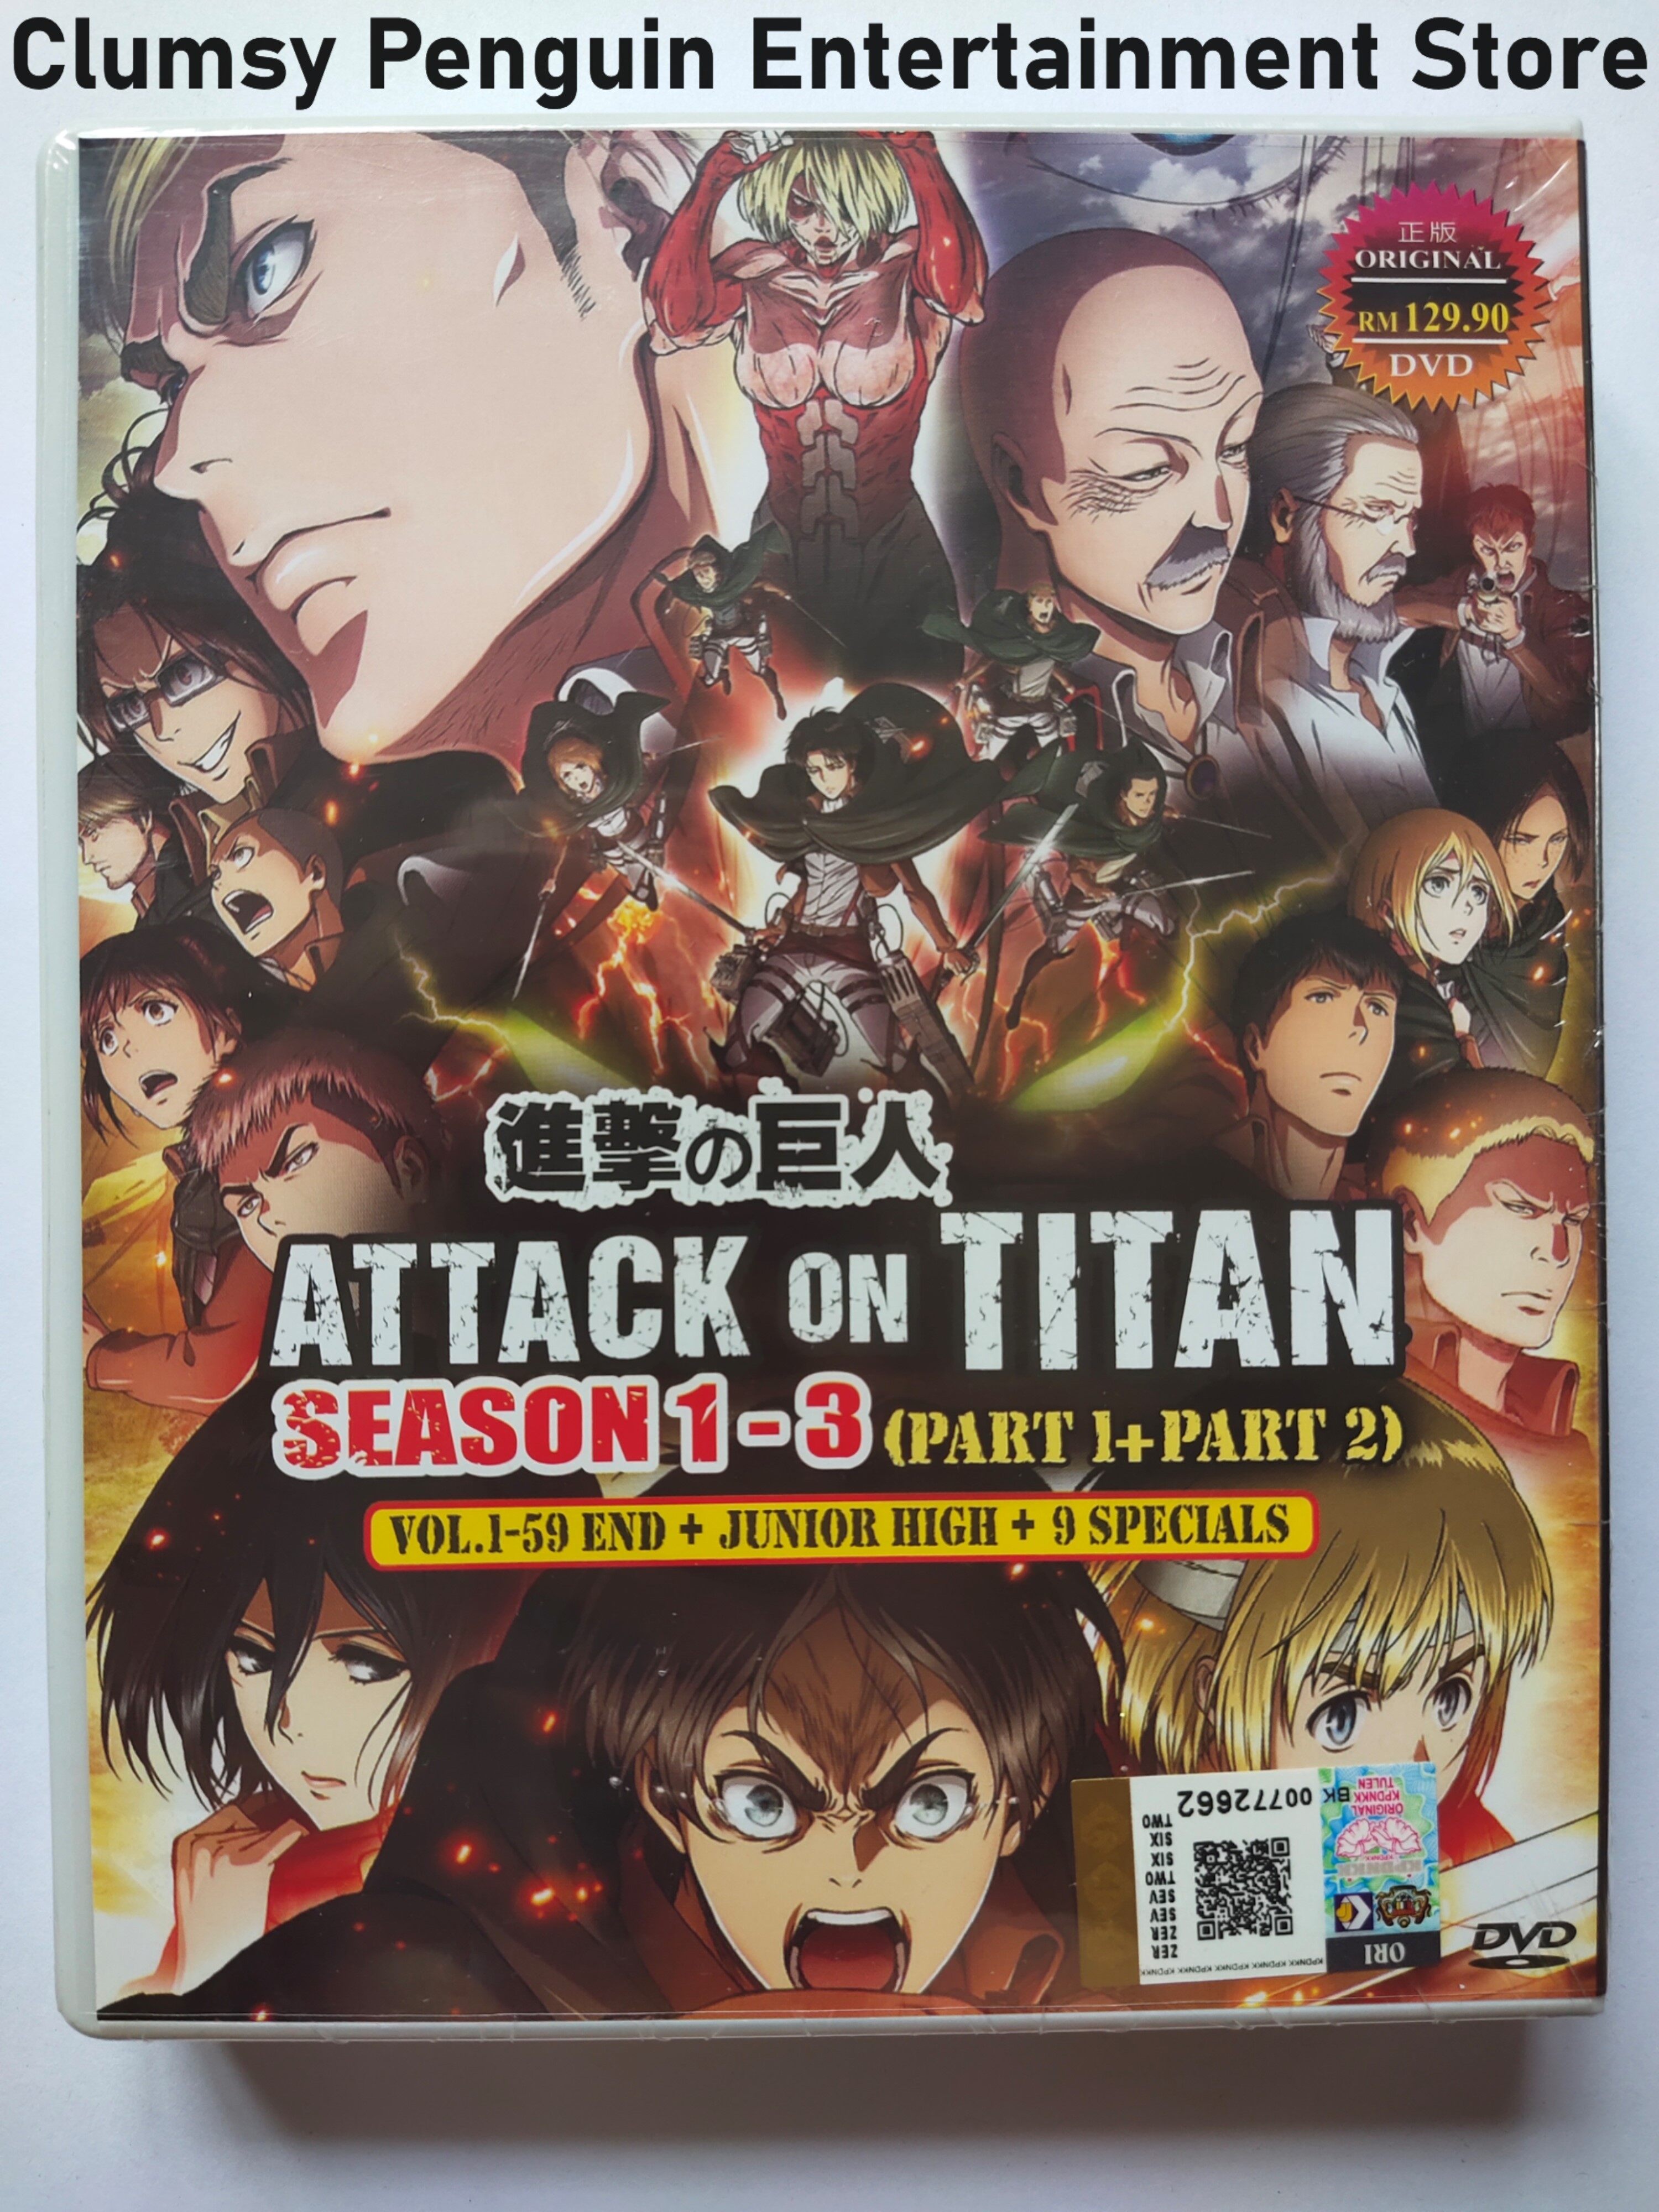 Anime DVD Attack On Titan Season 1-3 (Part 1 + Part 2) (Vol. 1-59 End) +  Junior High + 9 Specials | Lazada